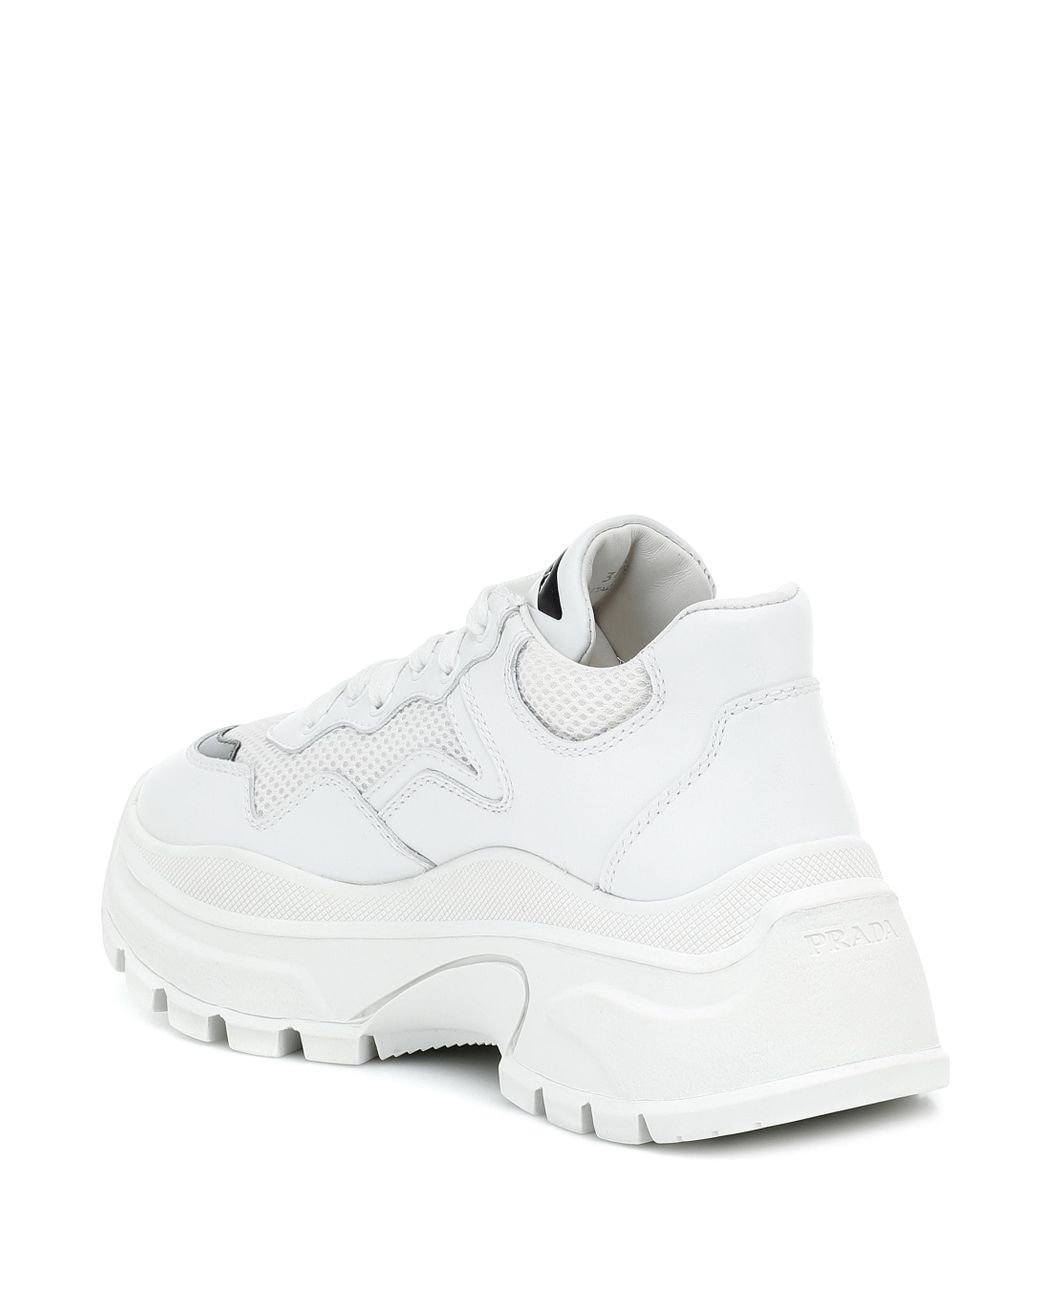 Prada Centaurus Leather Sneakers in White | Lyst